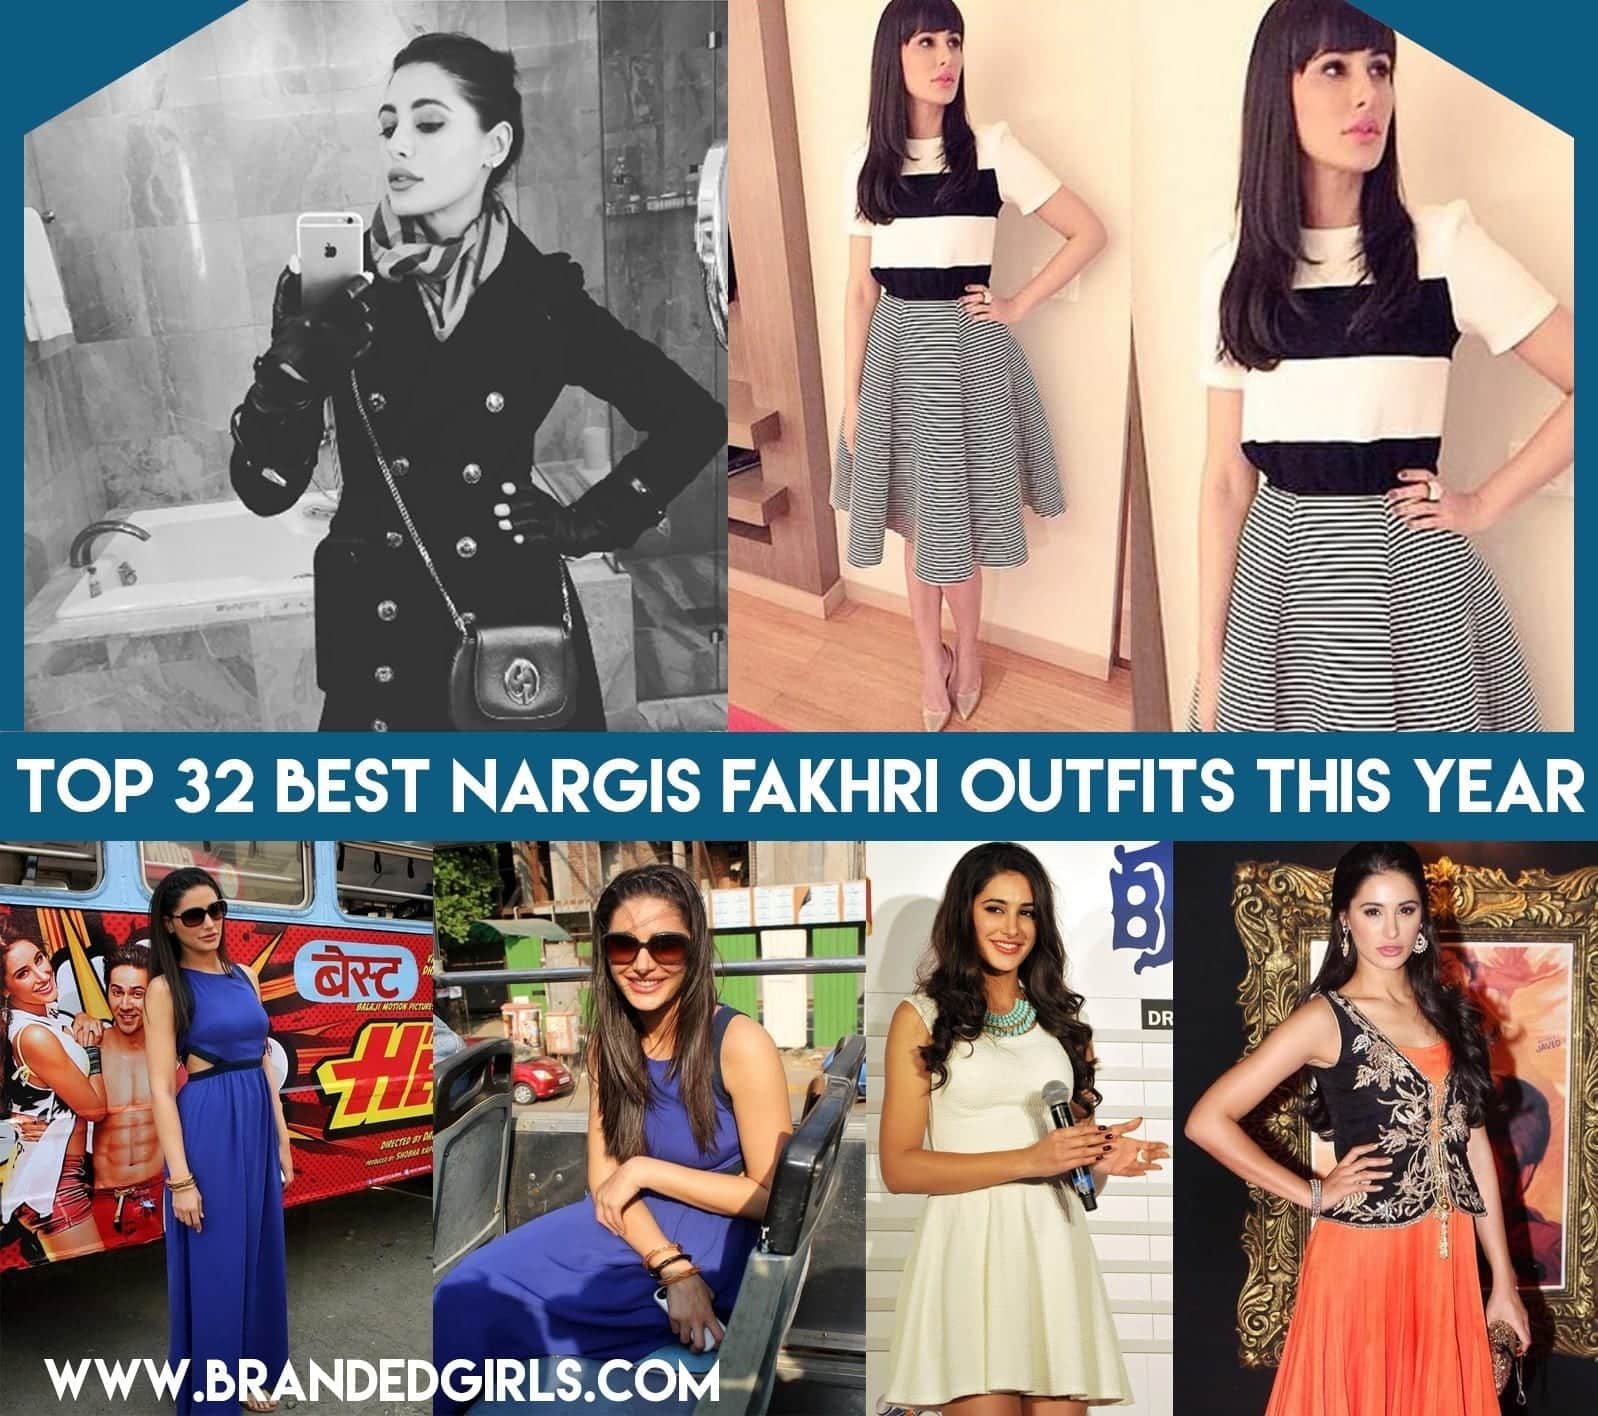 Top 32 Best Nargis Fakhri Outfits